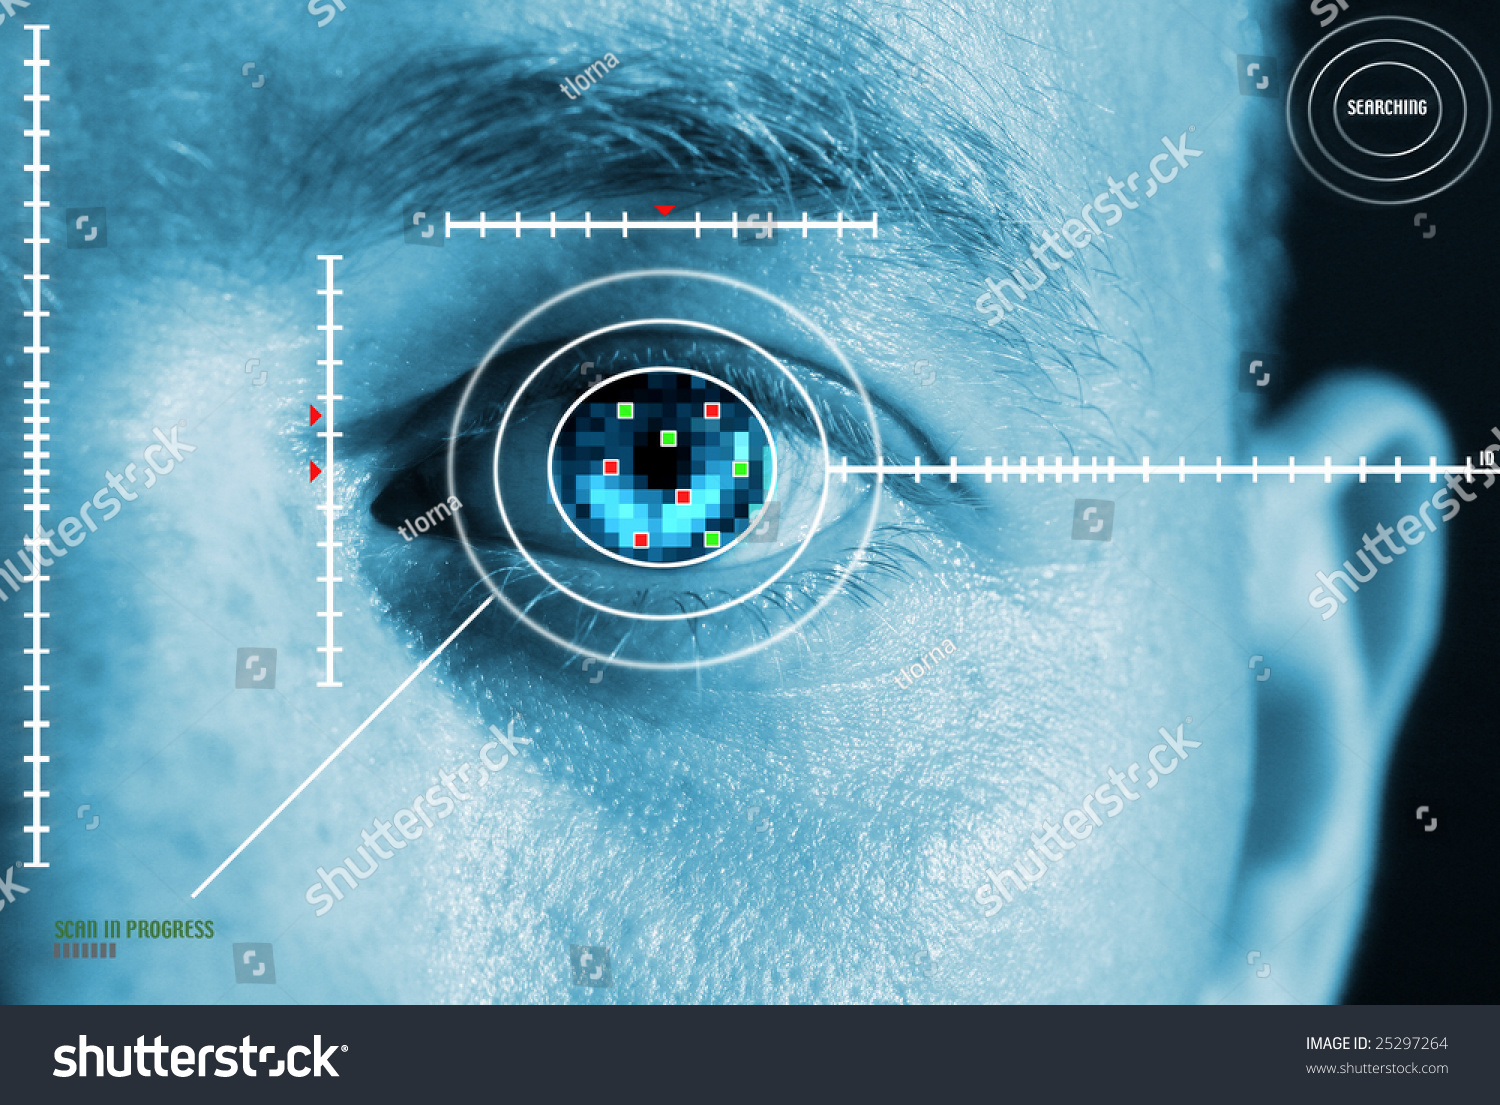 Iris Scan Security Identification Eye Scanner Stock Photo 25297264 - Shutterstock1500 x 1105